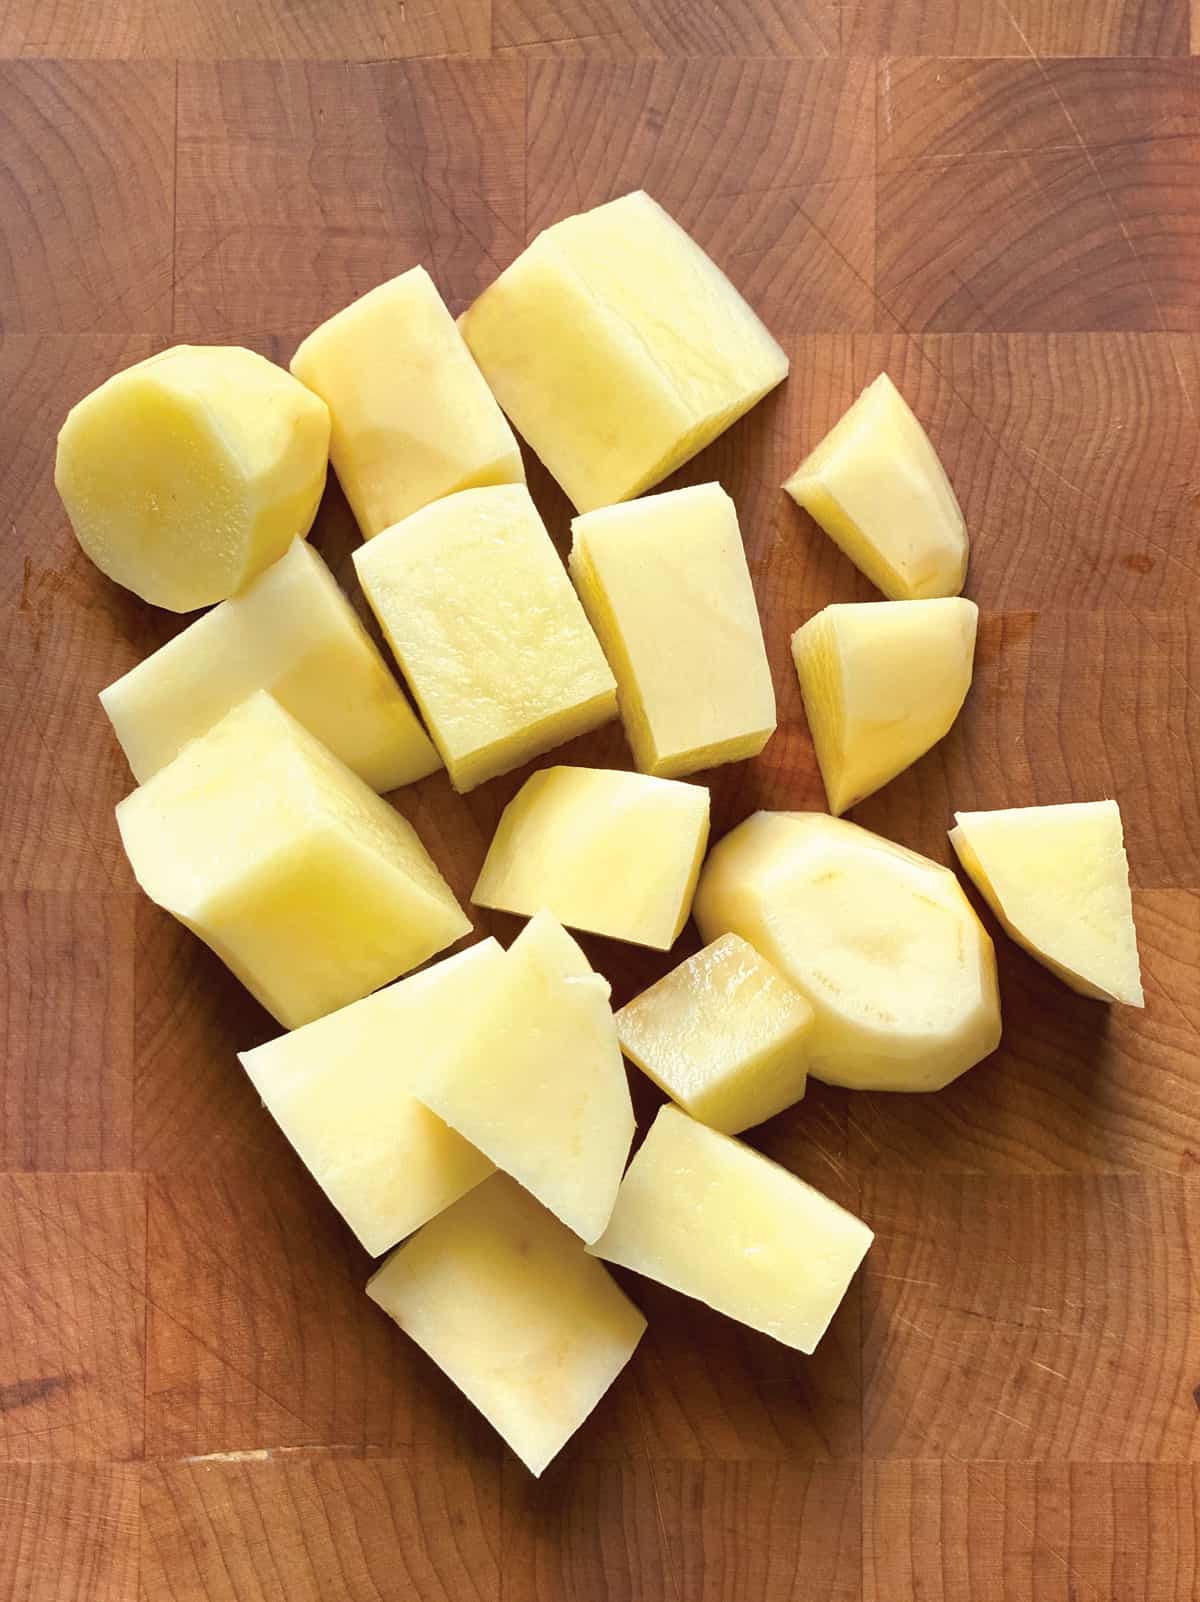 Small potato pieces on a butcher block.